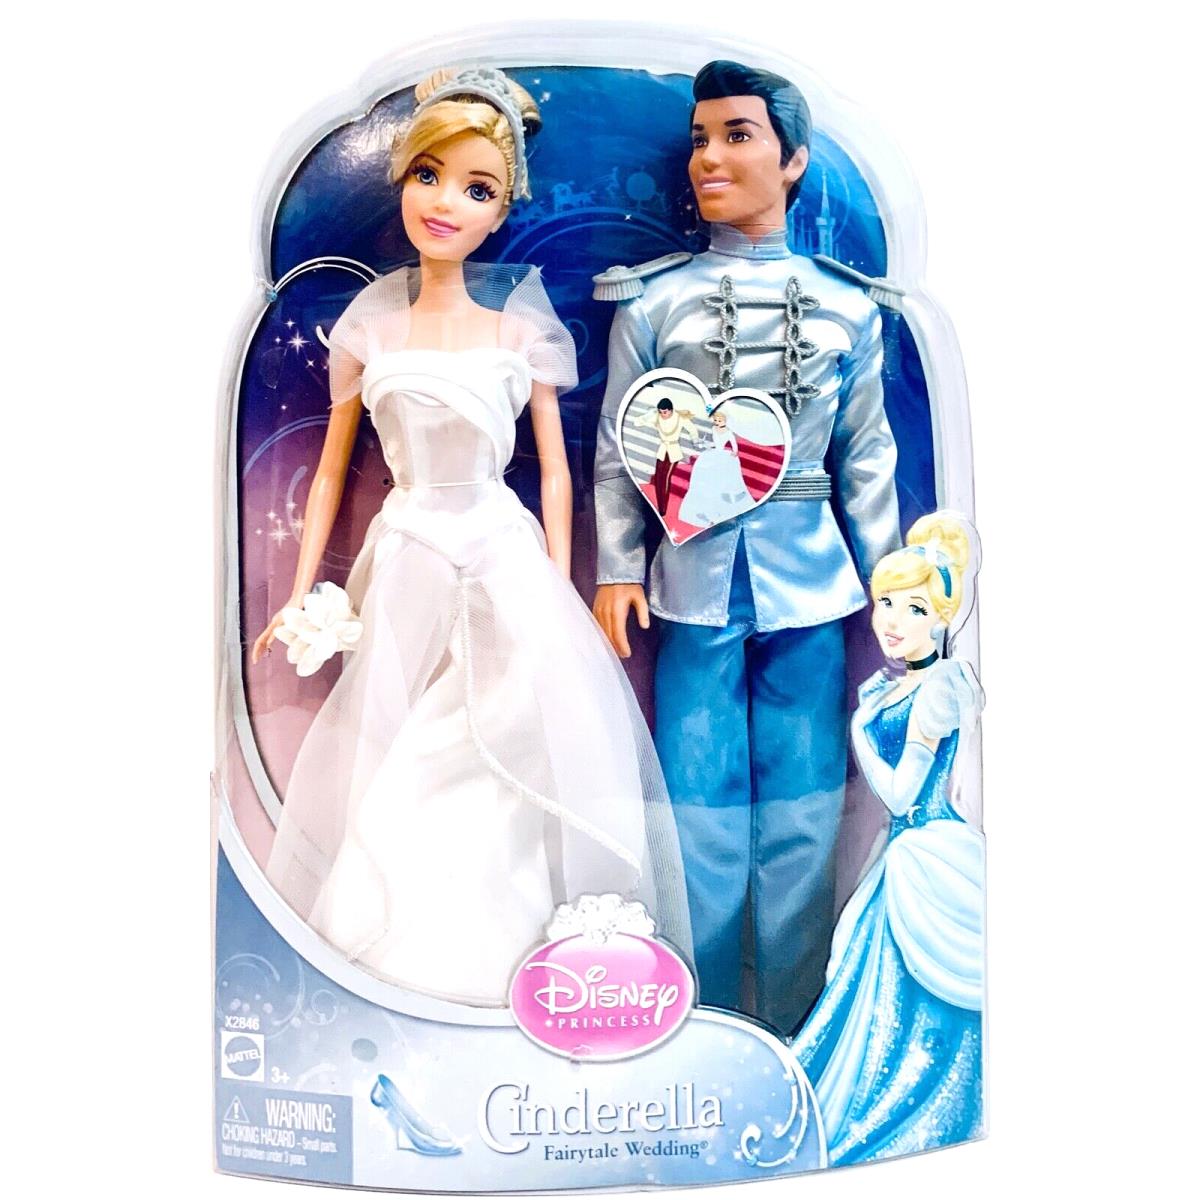 Mattel Disney Princess Cinderella Prince Charming Fairytale Wedding Doll Set